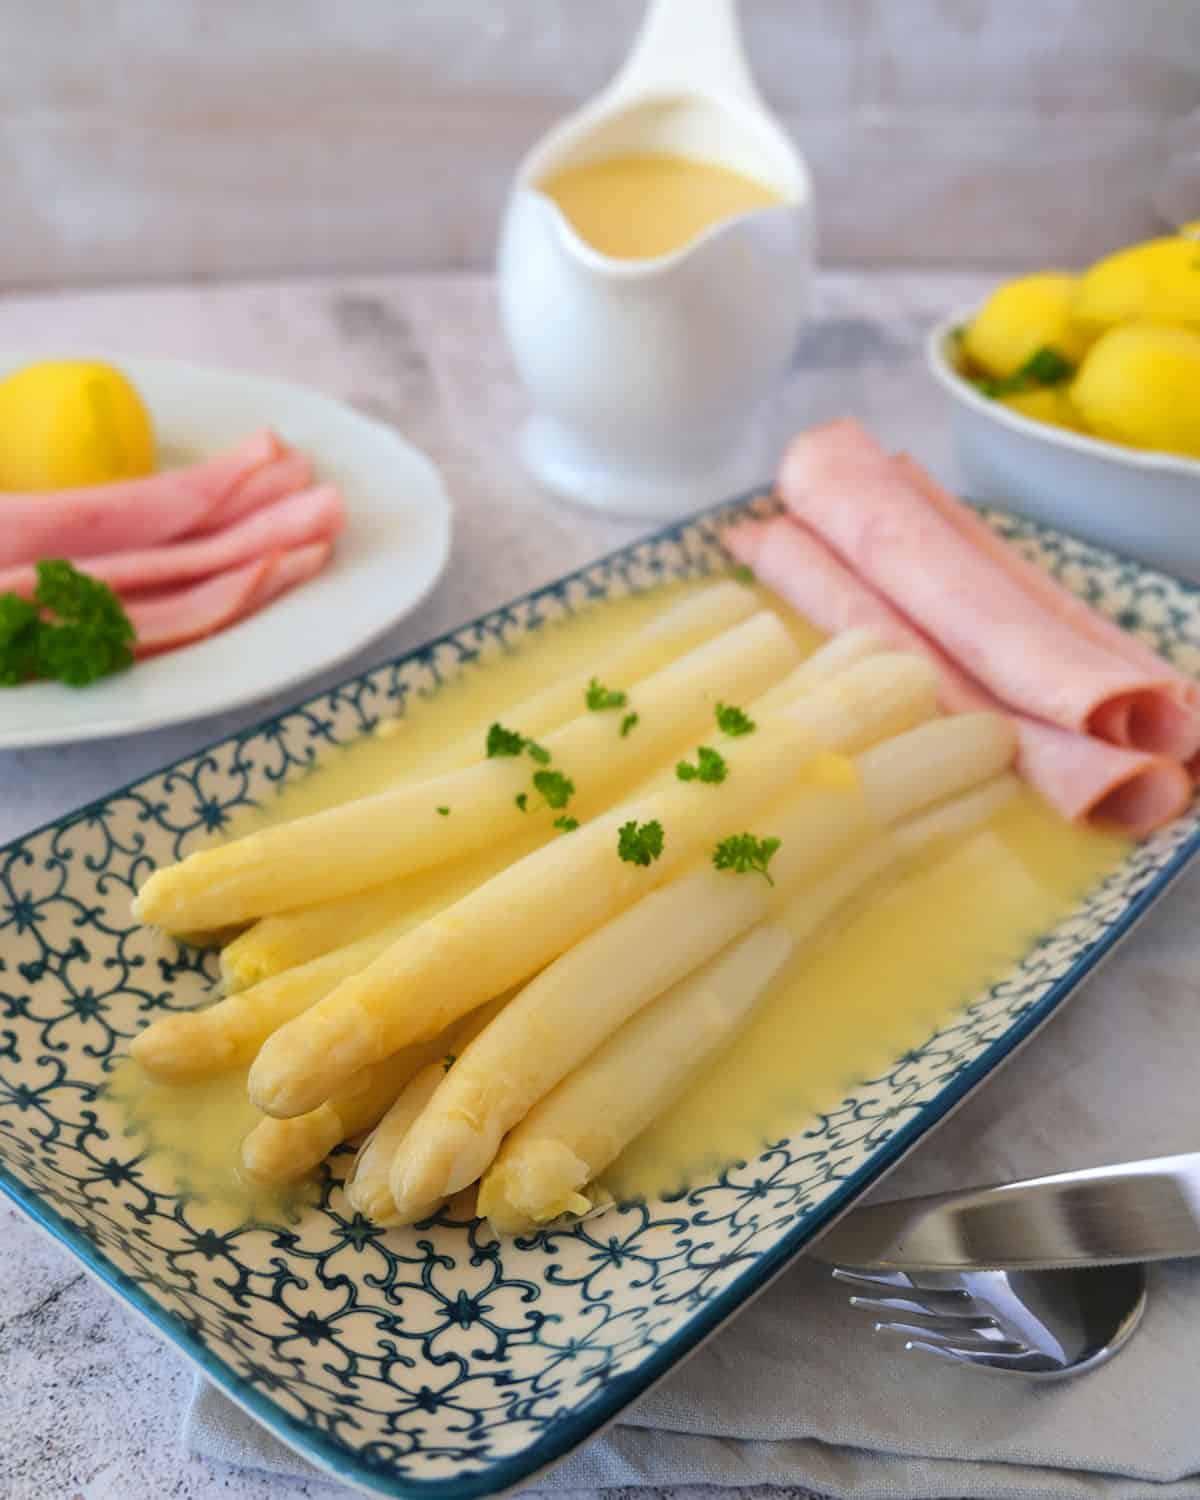 White asparagus with sauce